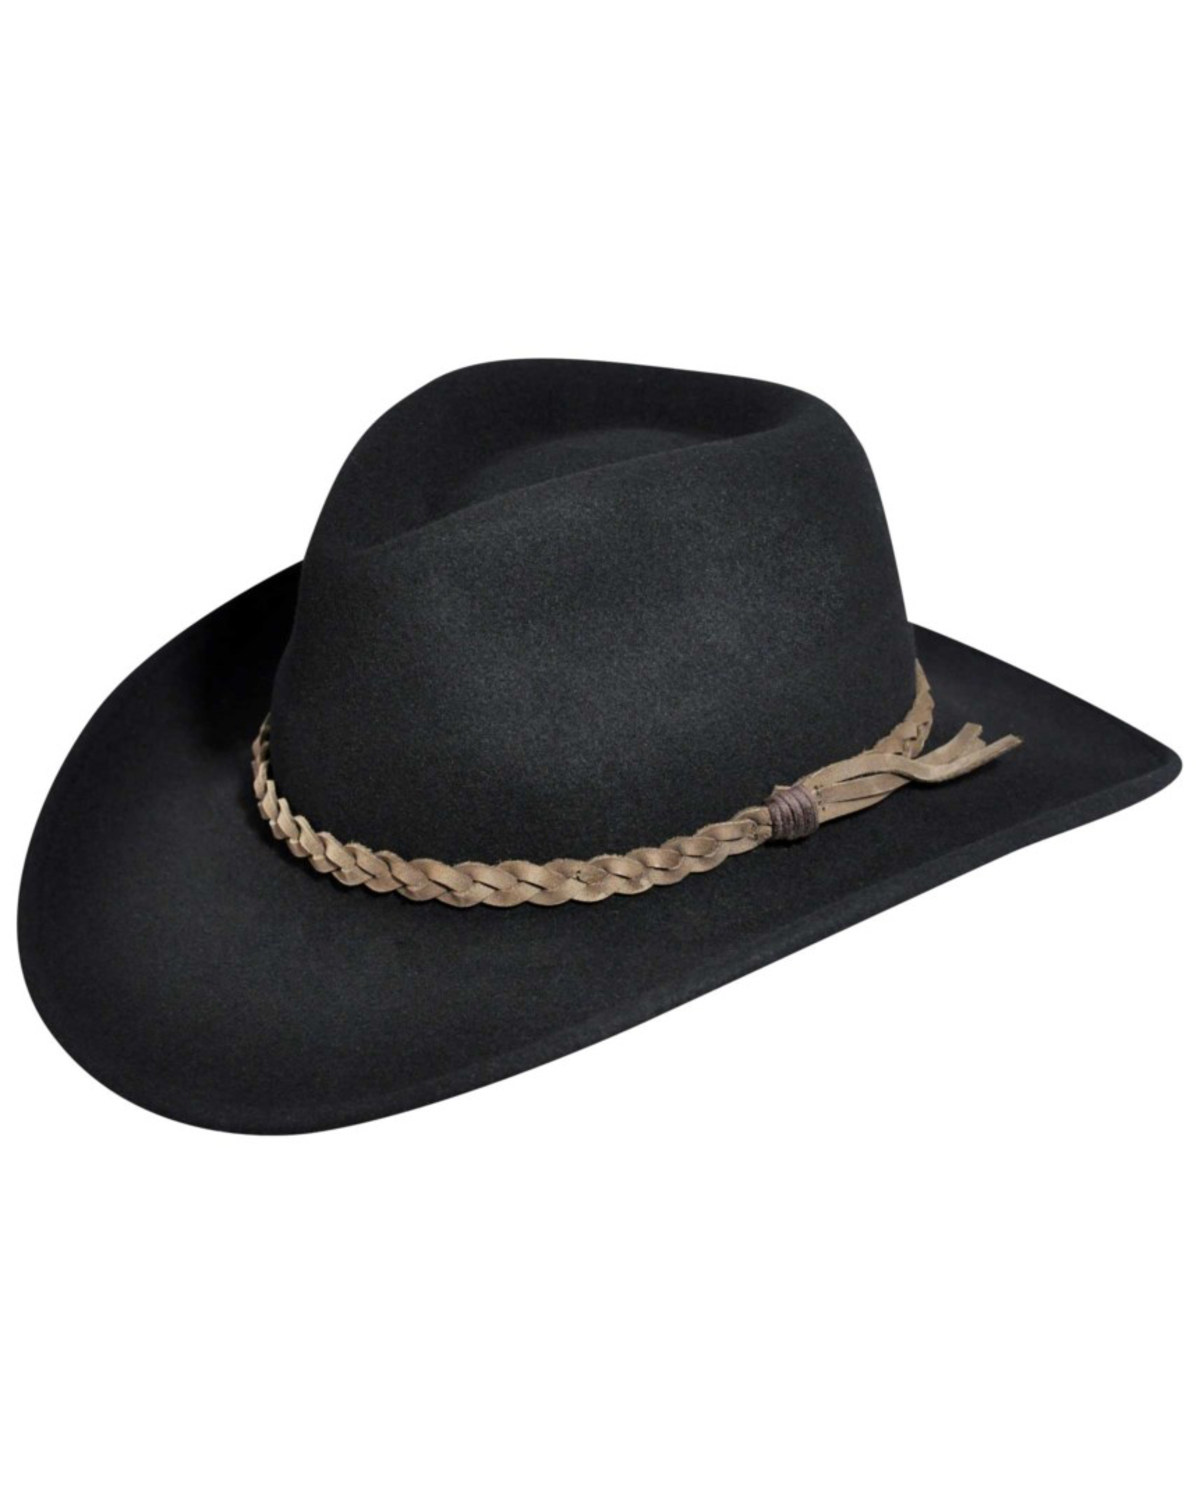 Wind River by Bailey Men's Switchback Felt Western Fashion Hat